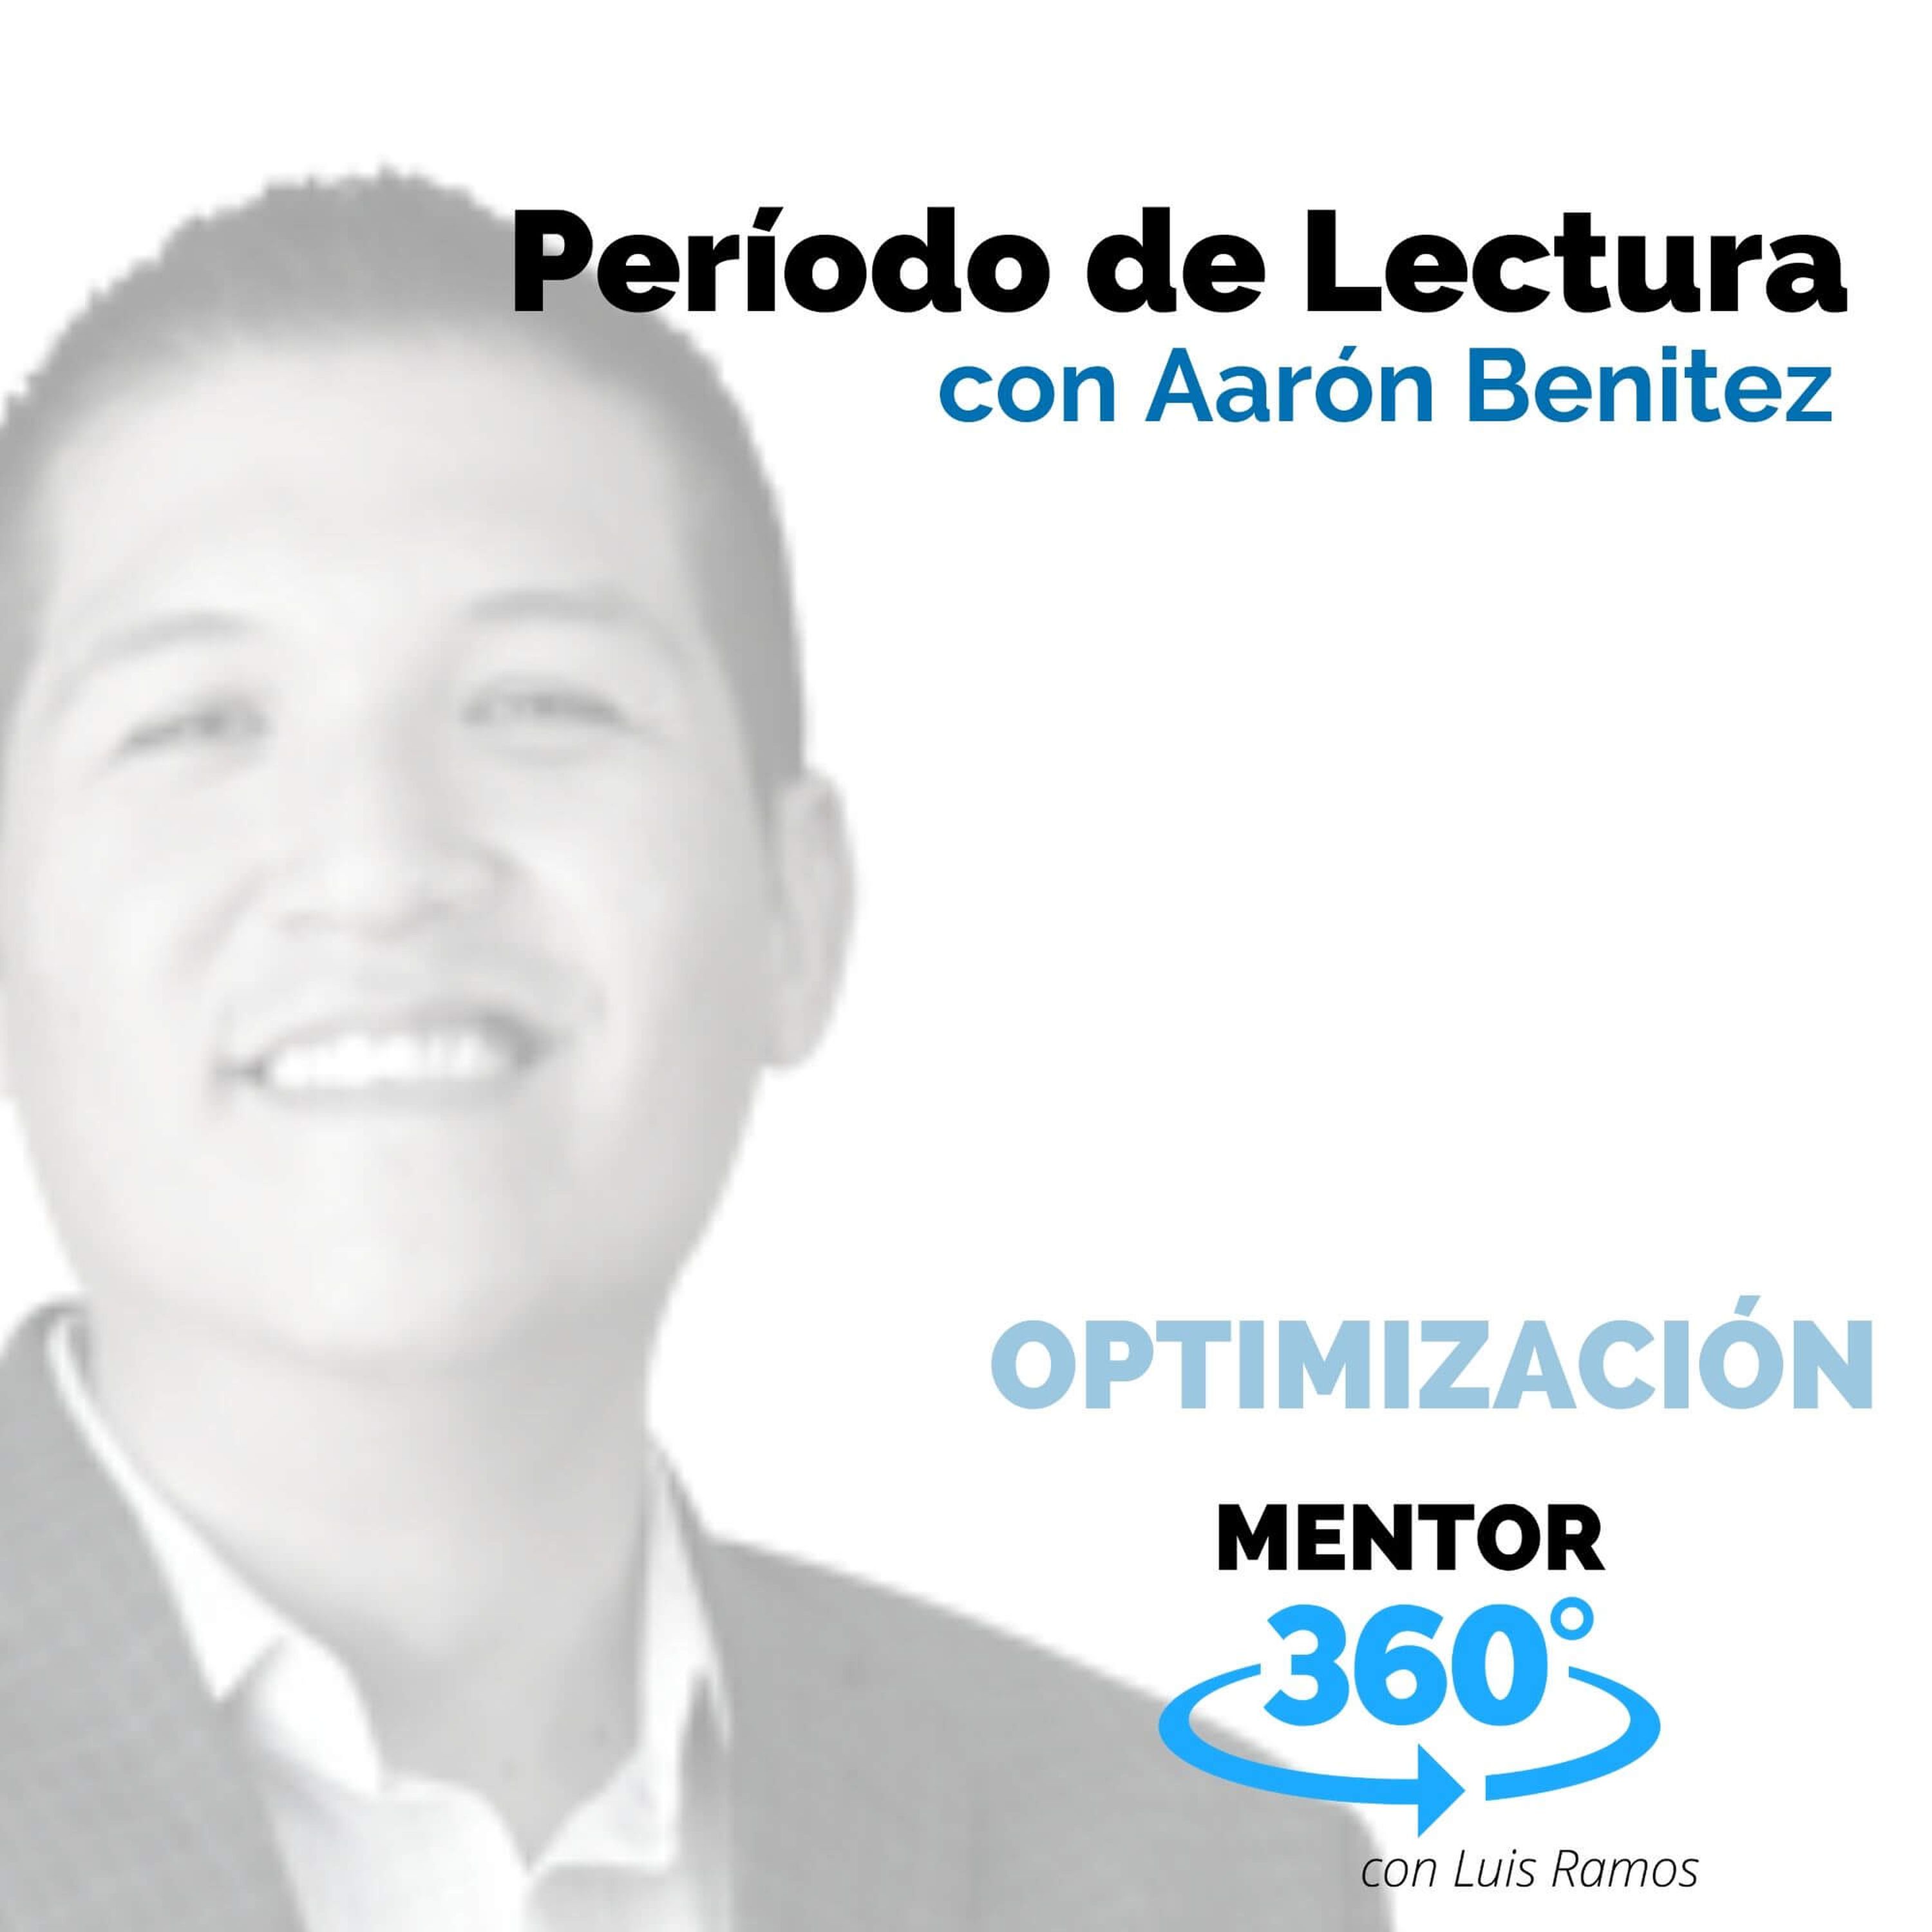 Período de Lectura, con Aarón Benítez - OPTIMIZACIÓN - MENTOR360